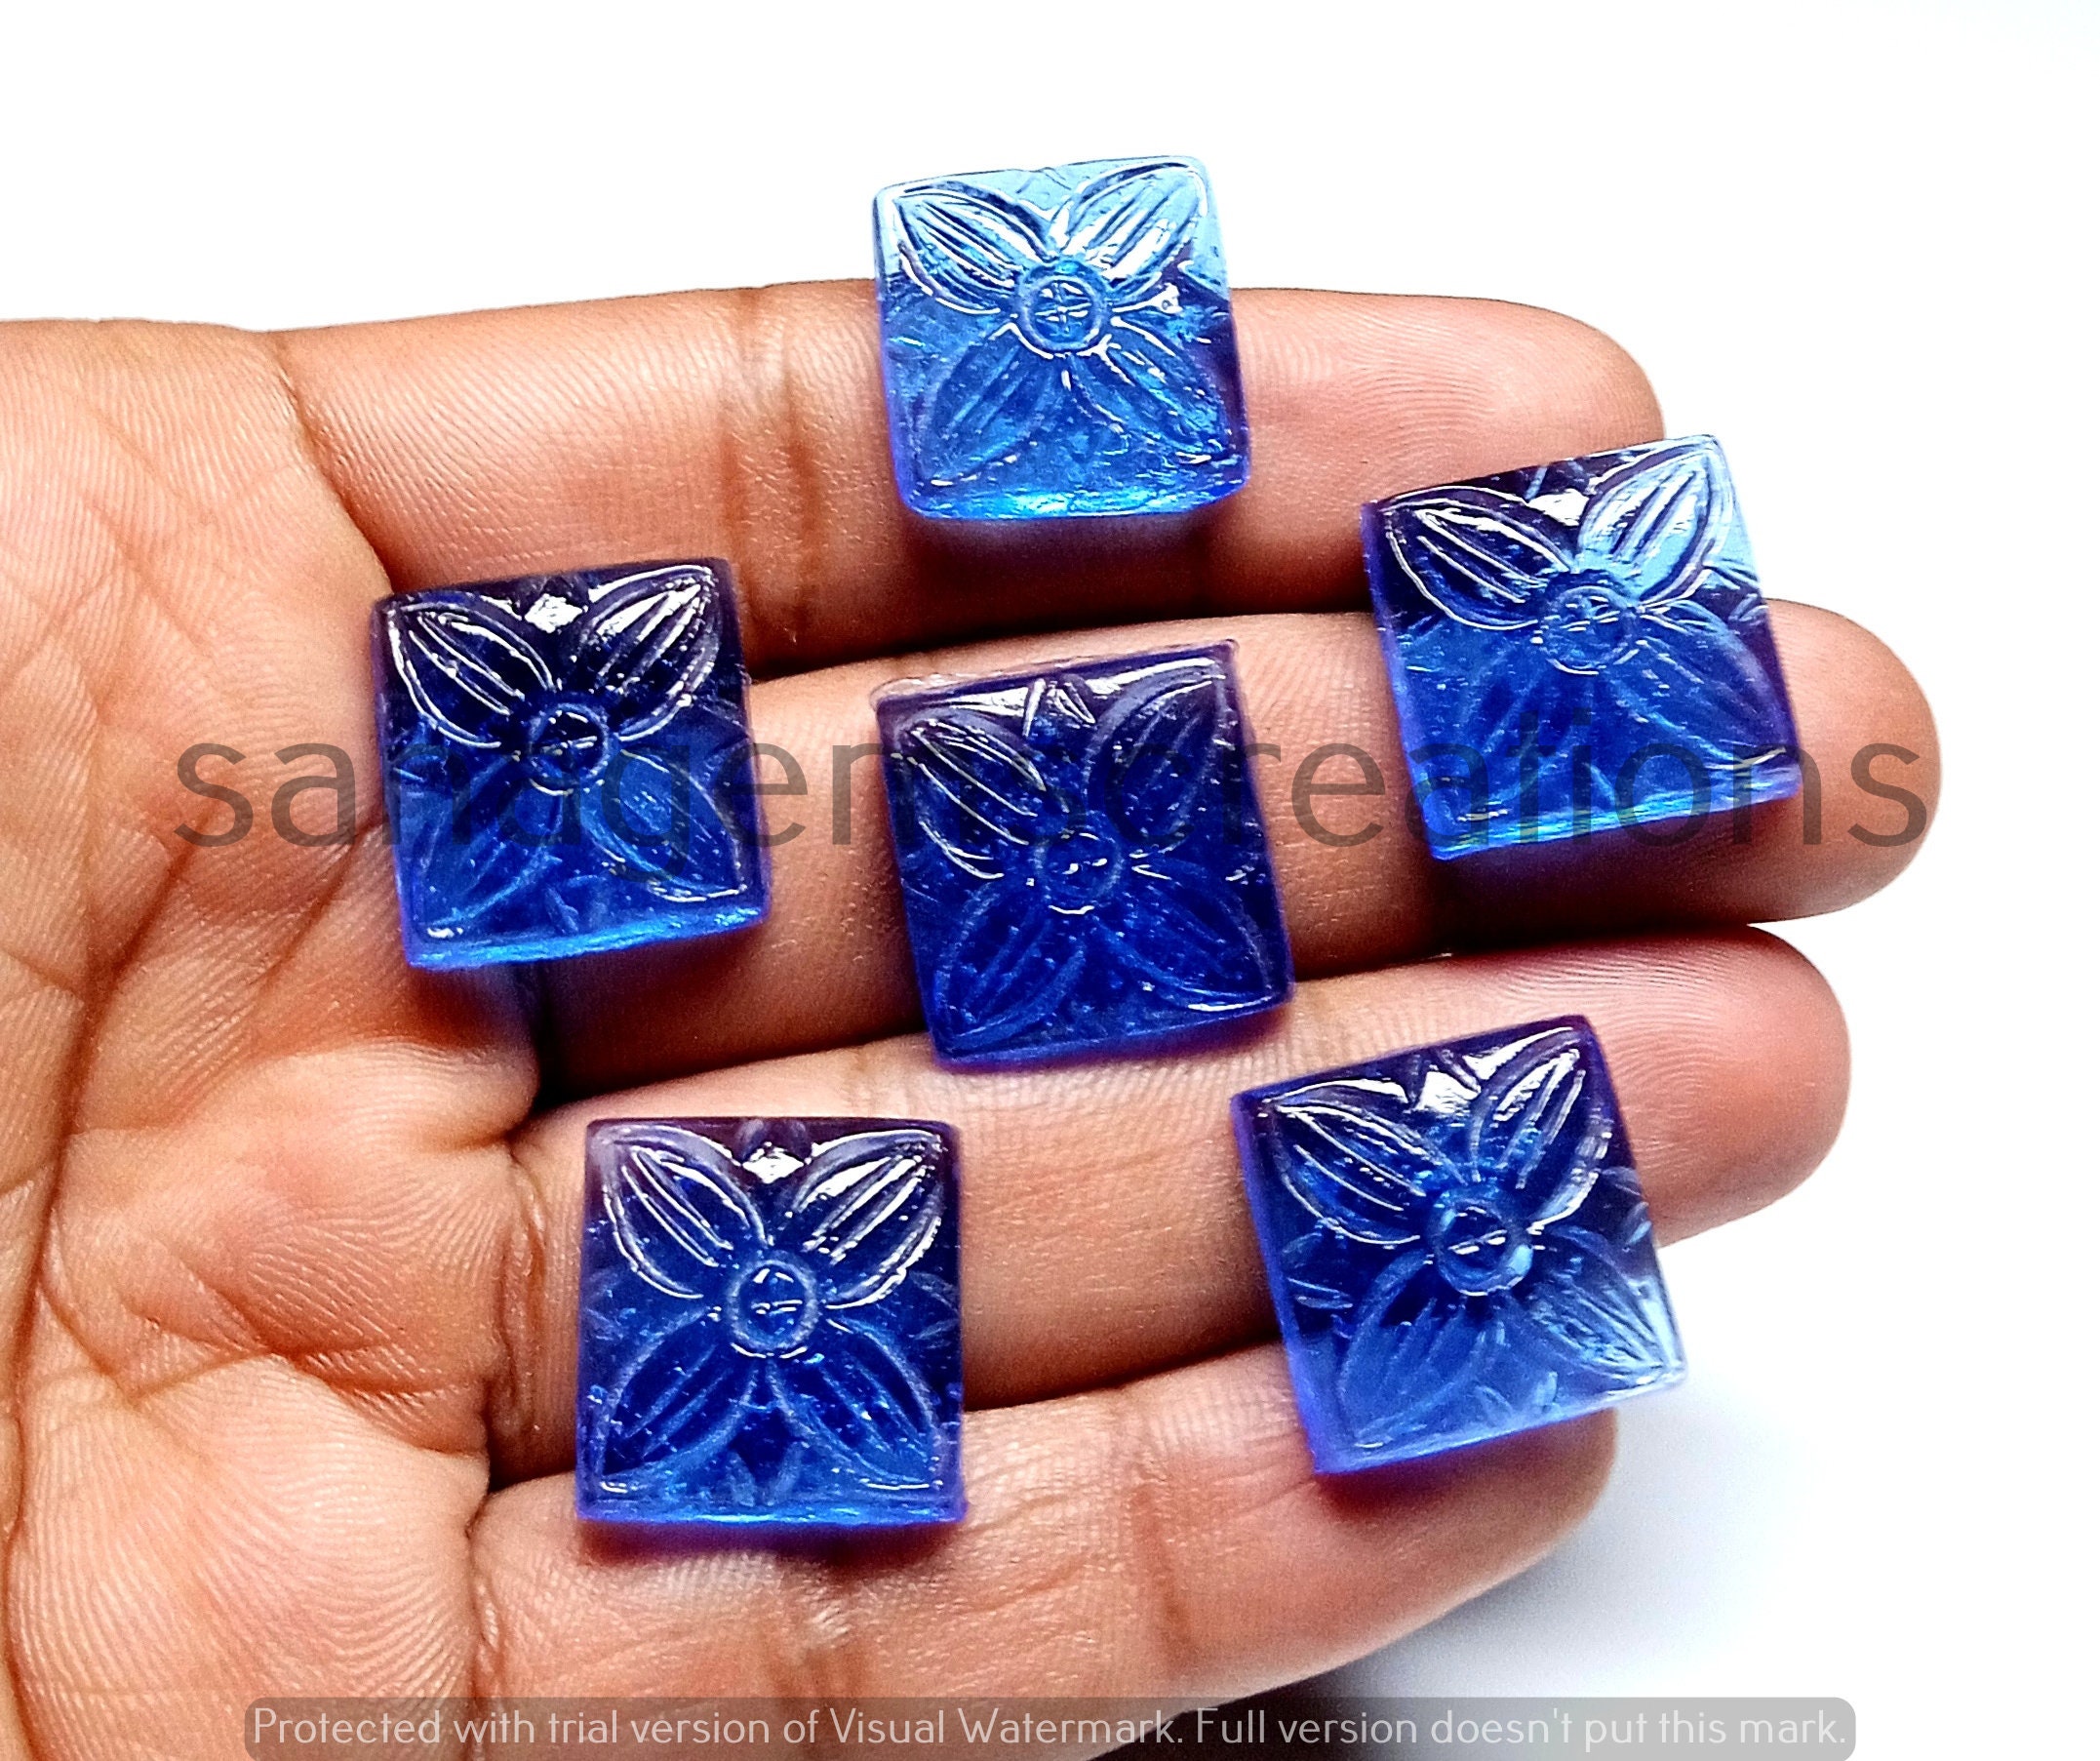 Amazing Blue Quartz Lief Carved Gemstone Square Shape Light Blue Clear Glass Flowers Carvings Gemstone Pendant & Earrings Jewellery Making.